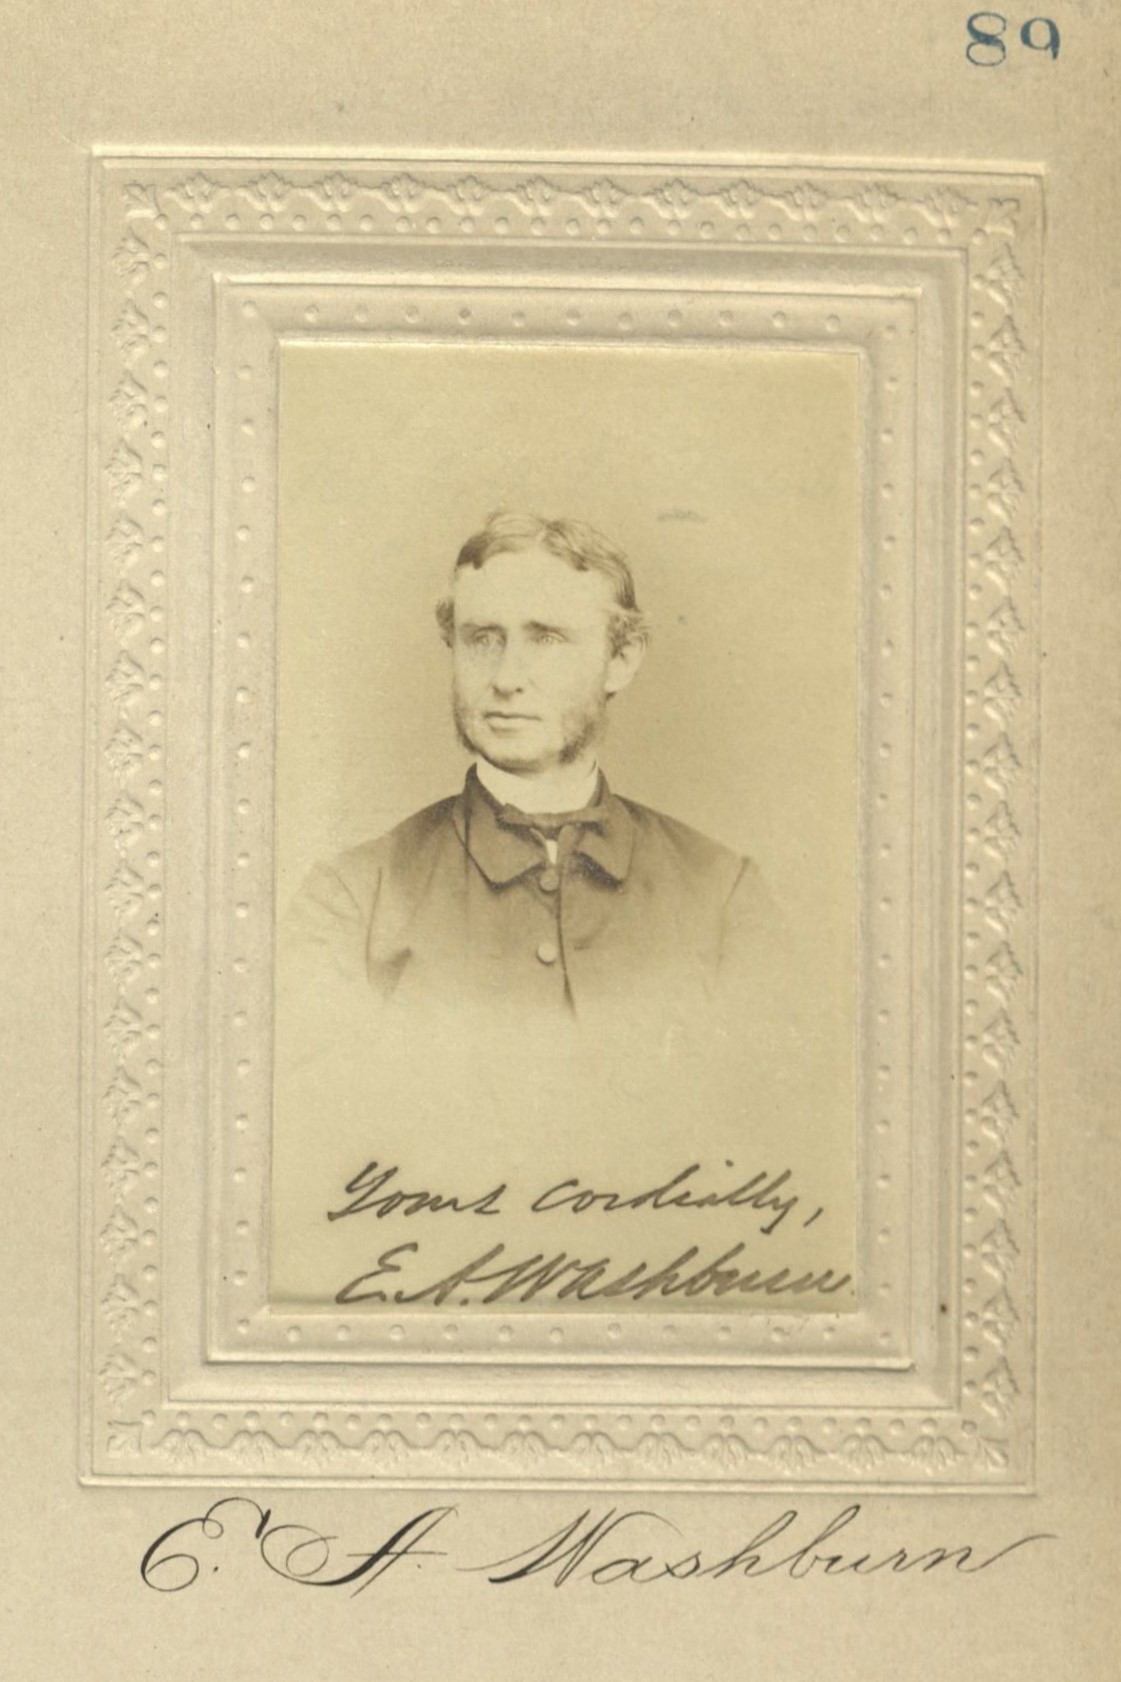 Member portrait of Edward A. Washburn